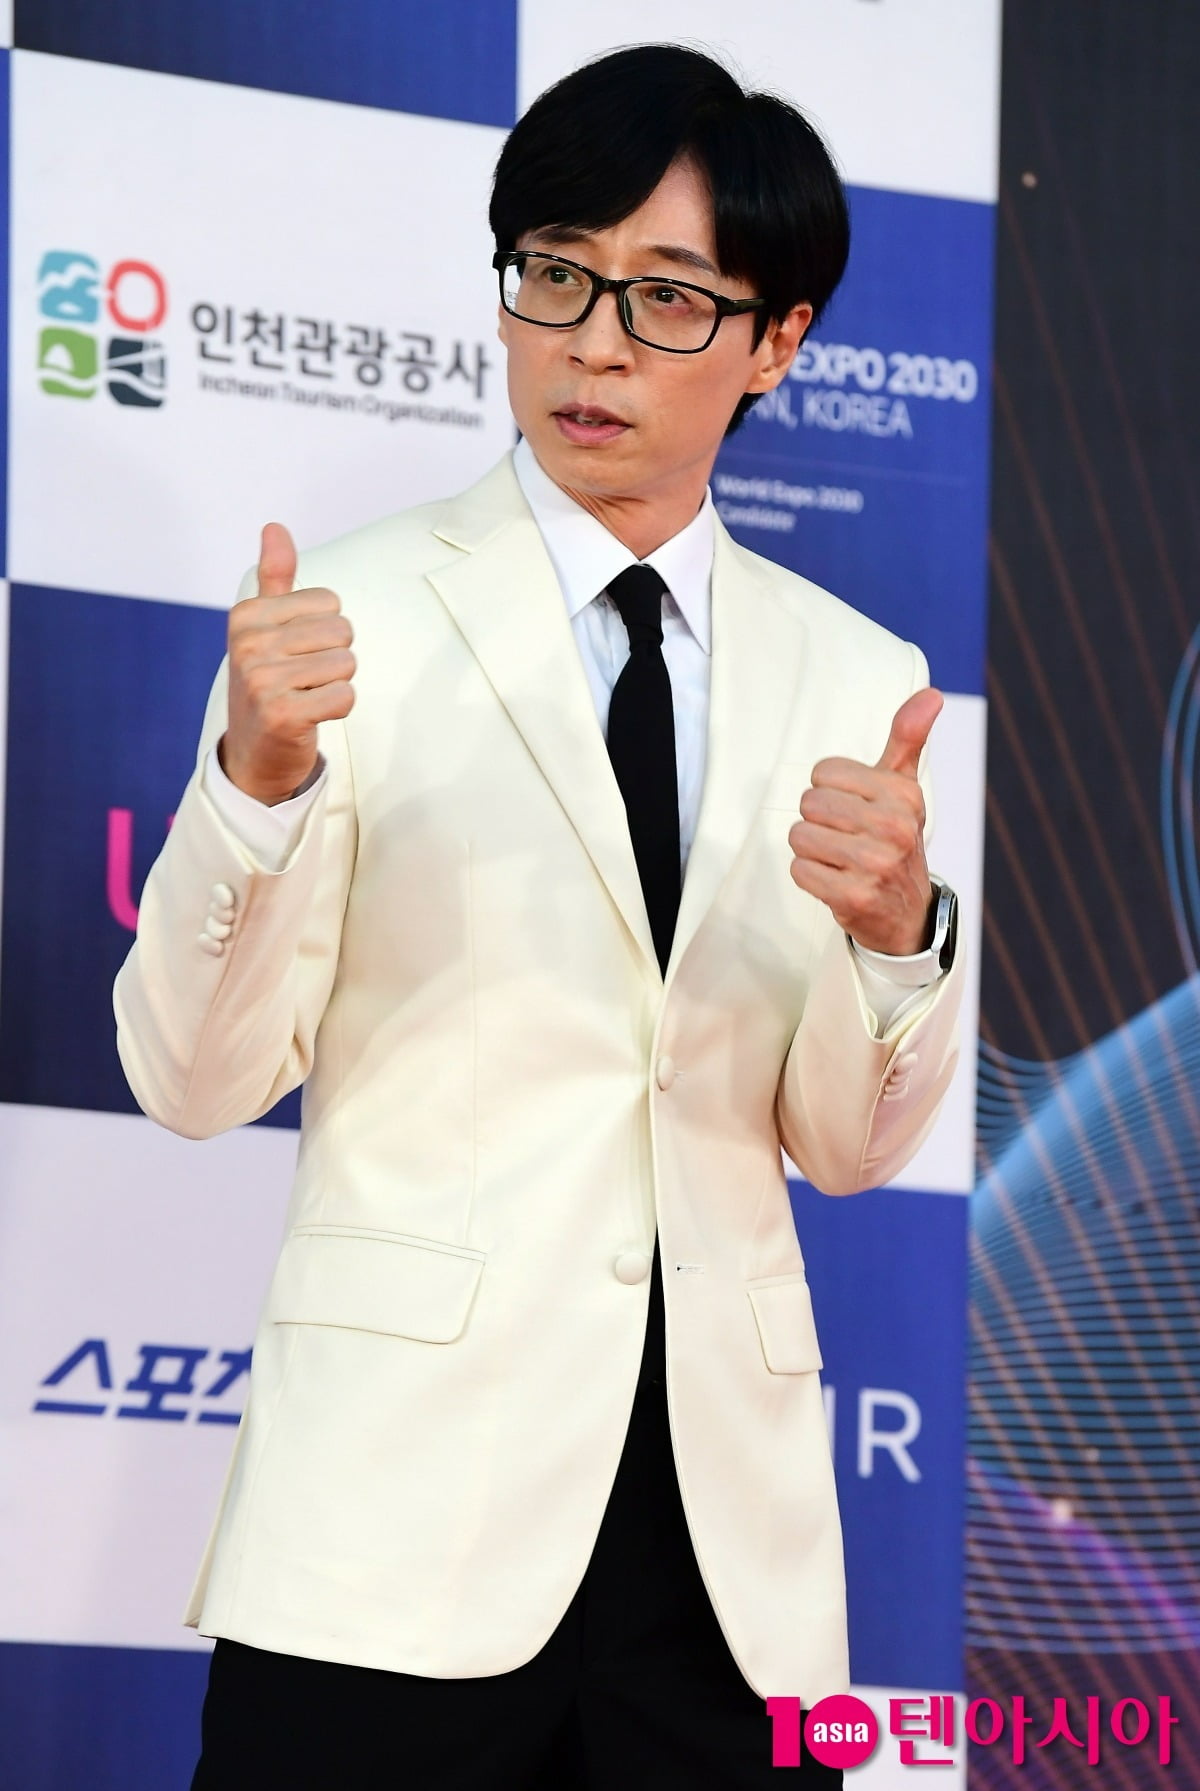 ‘20 billion building owner’ Yoo Jae-seok, his eyes turned properly